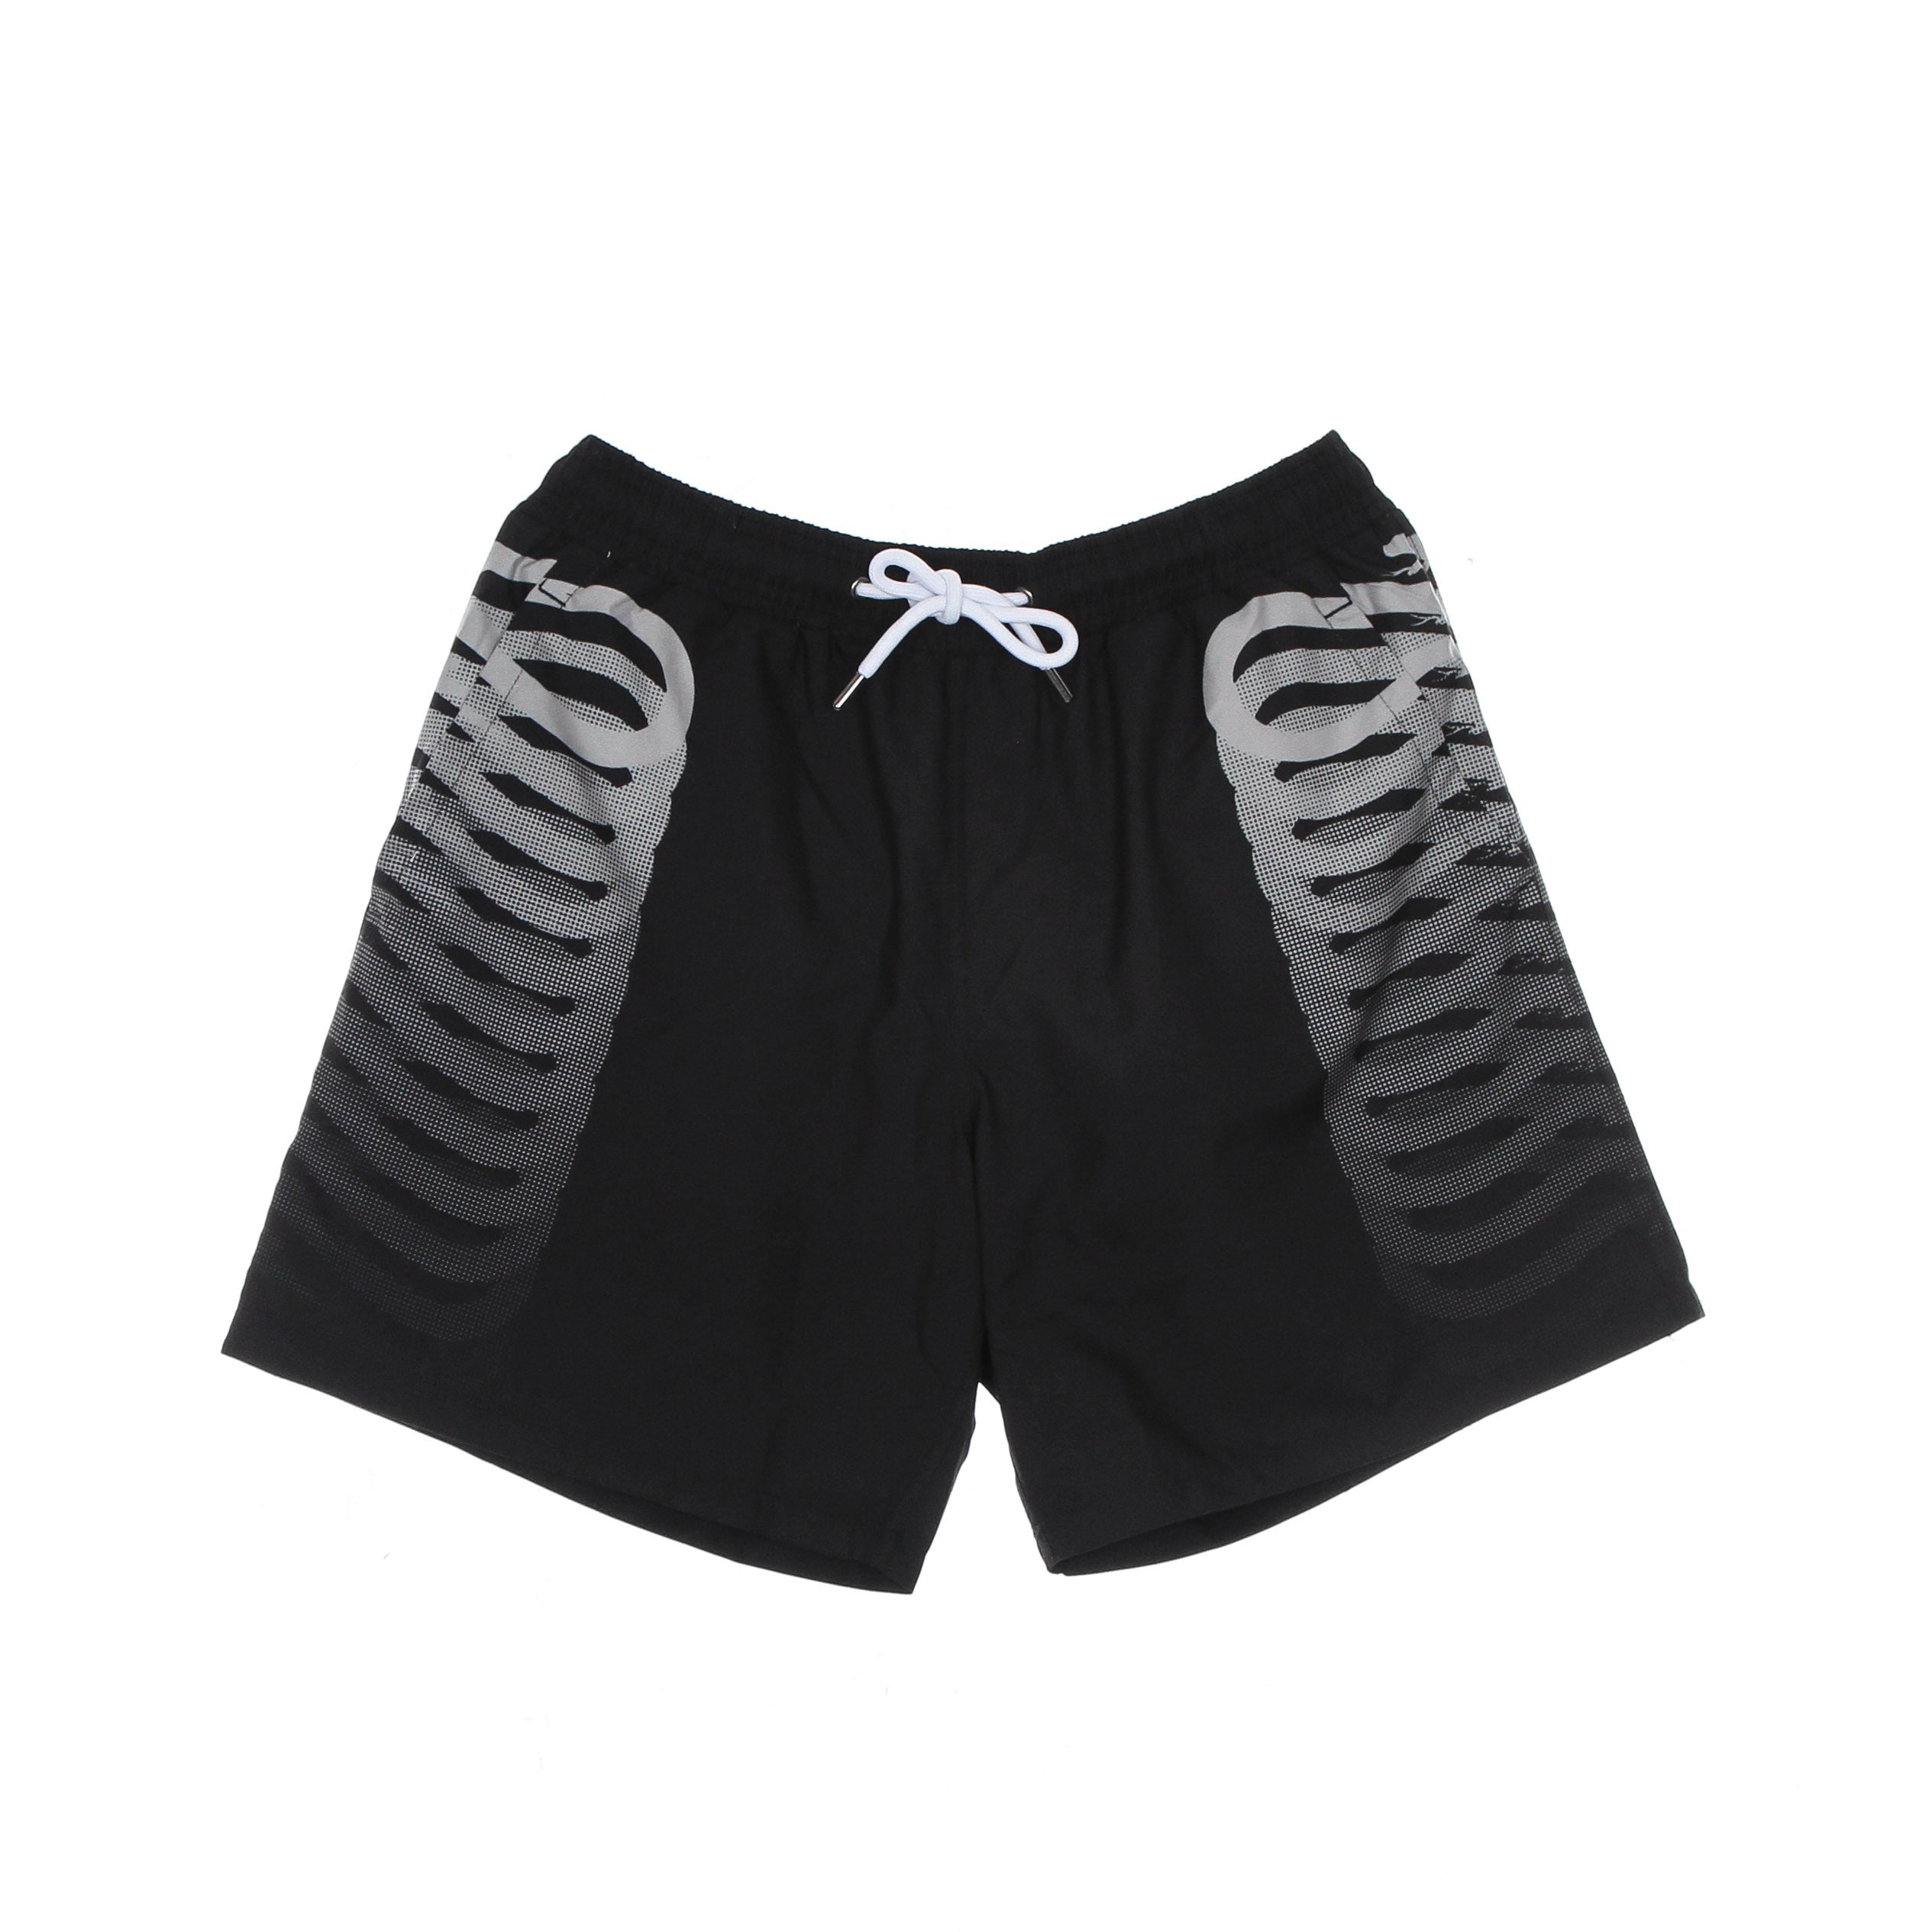 Men's Ribs Swim Trunks Swim Shorts Black/grey